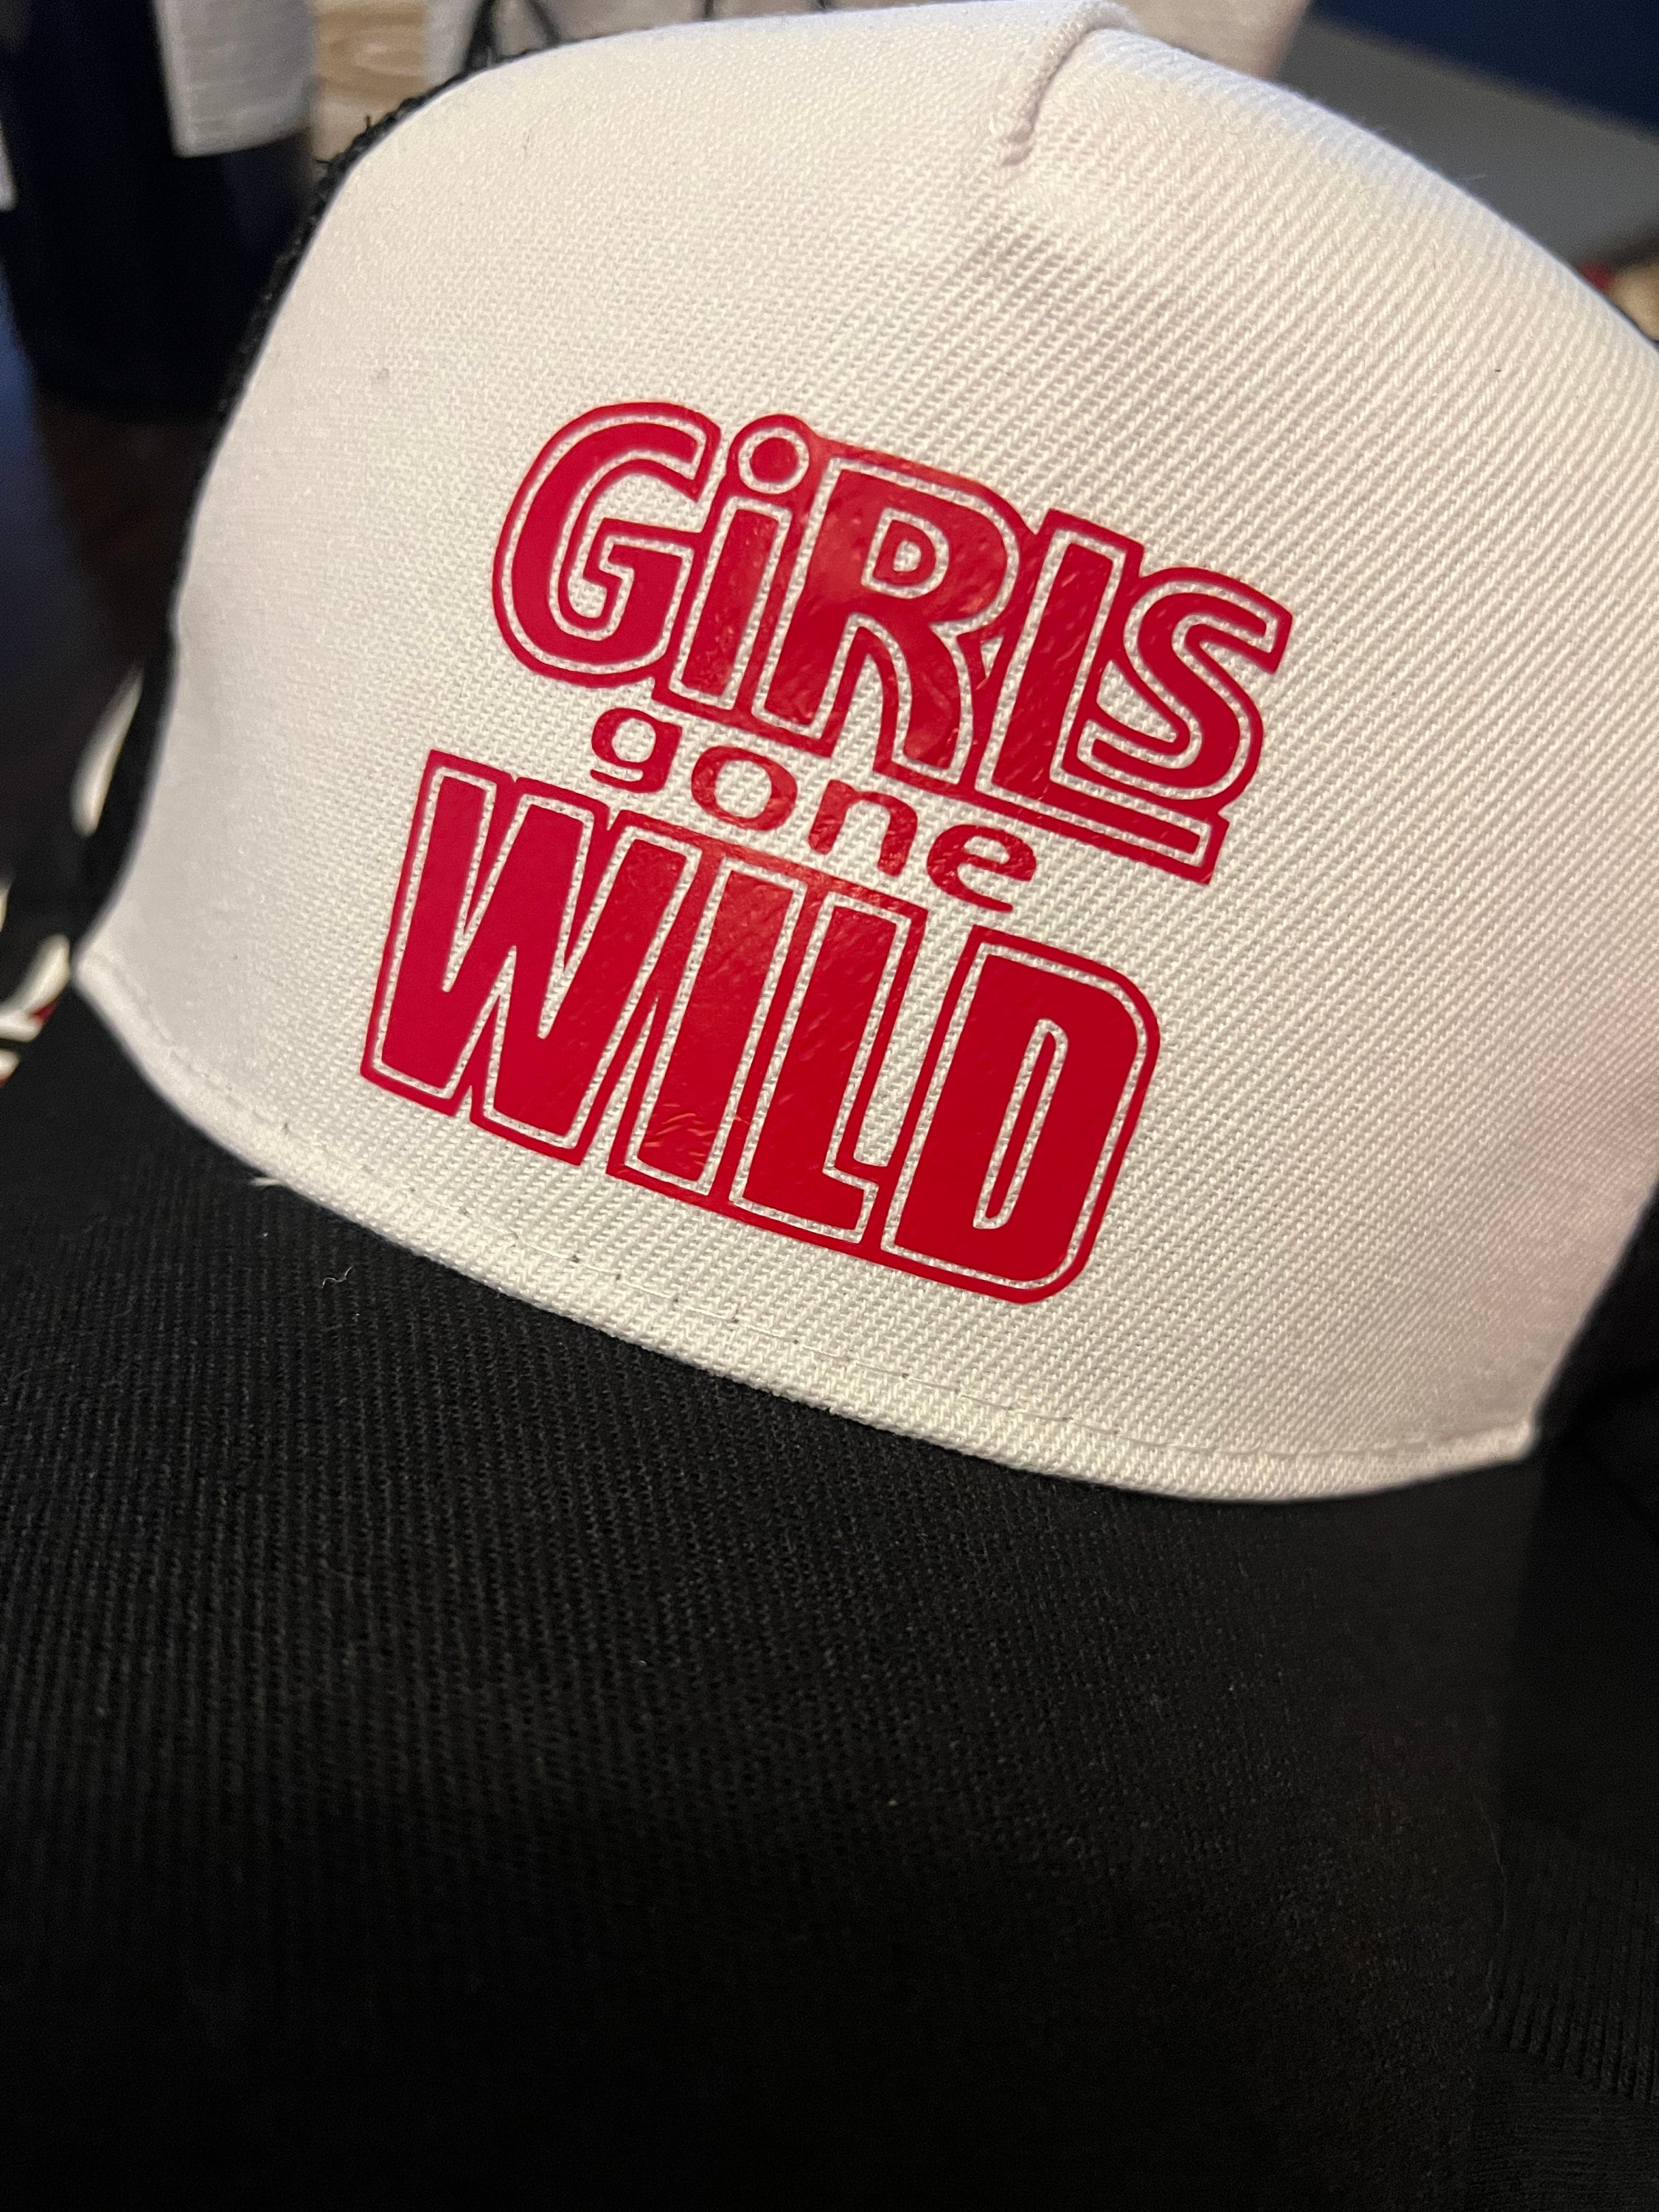 Girls Gone Wild 69 of dallas